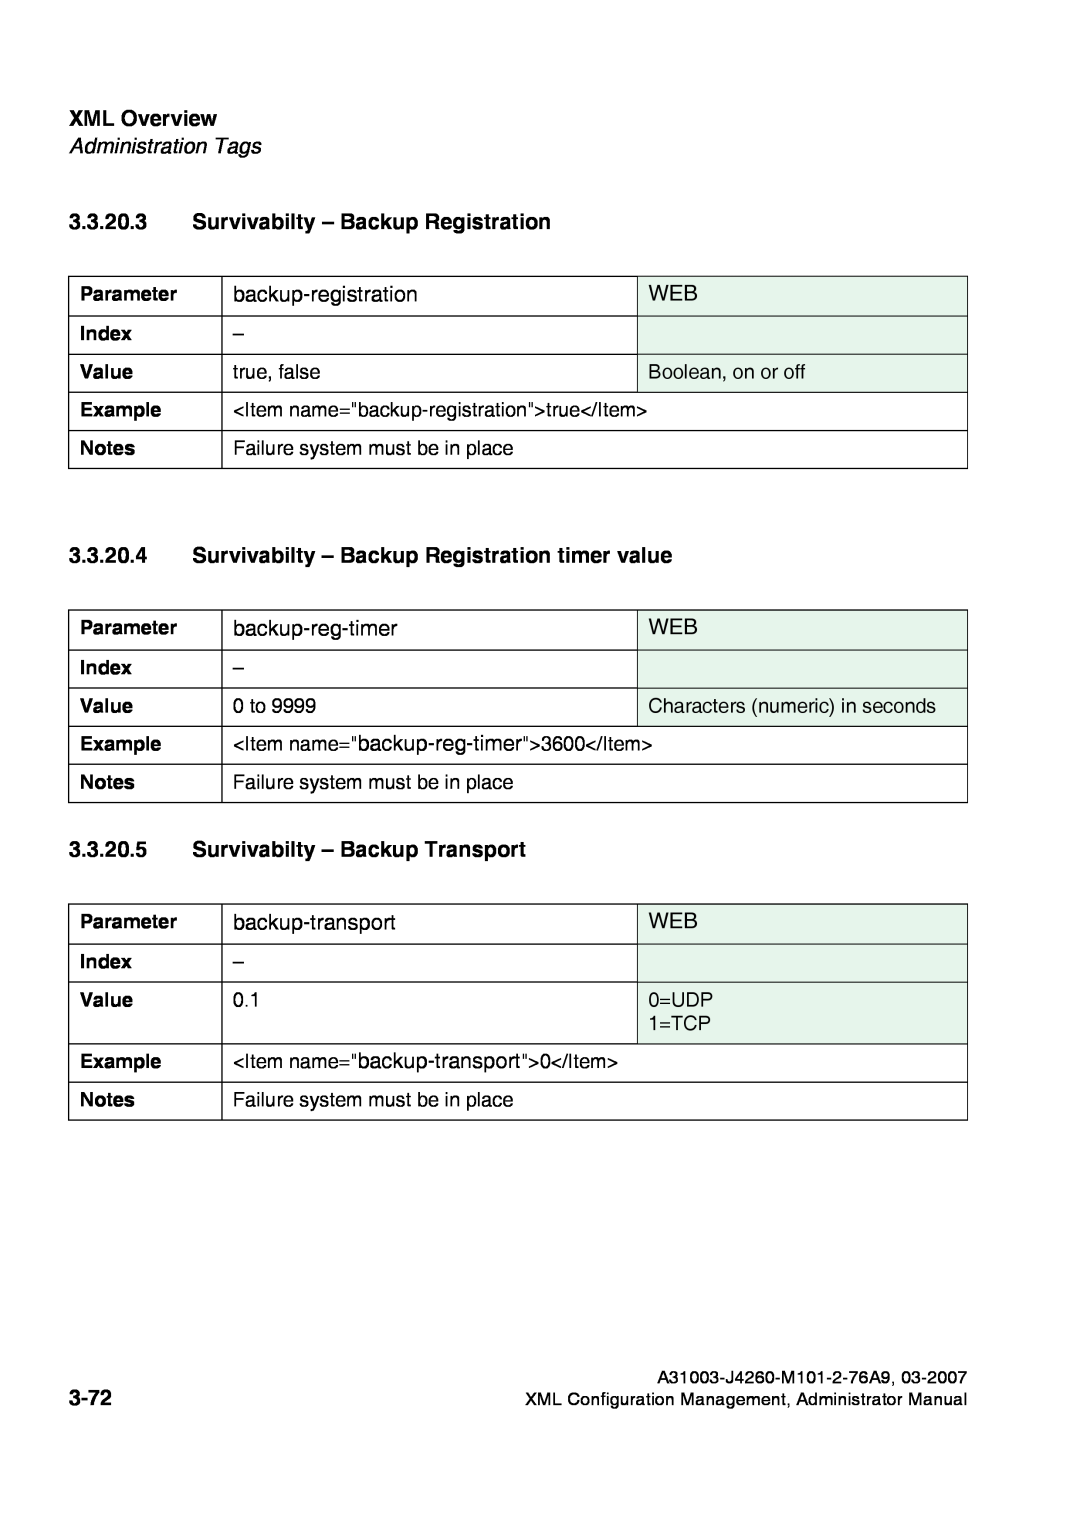 Siemens 420 S V6.0 Survivabilty - Backup Registration timer value, Survivabilty - Backup Transport, 3-72, XML Overview 